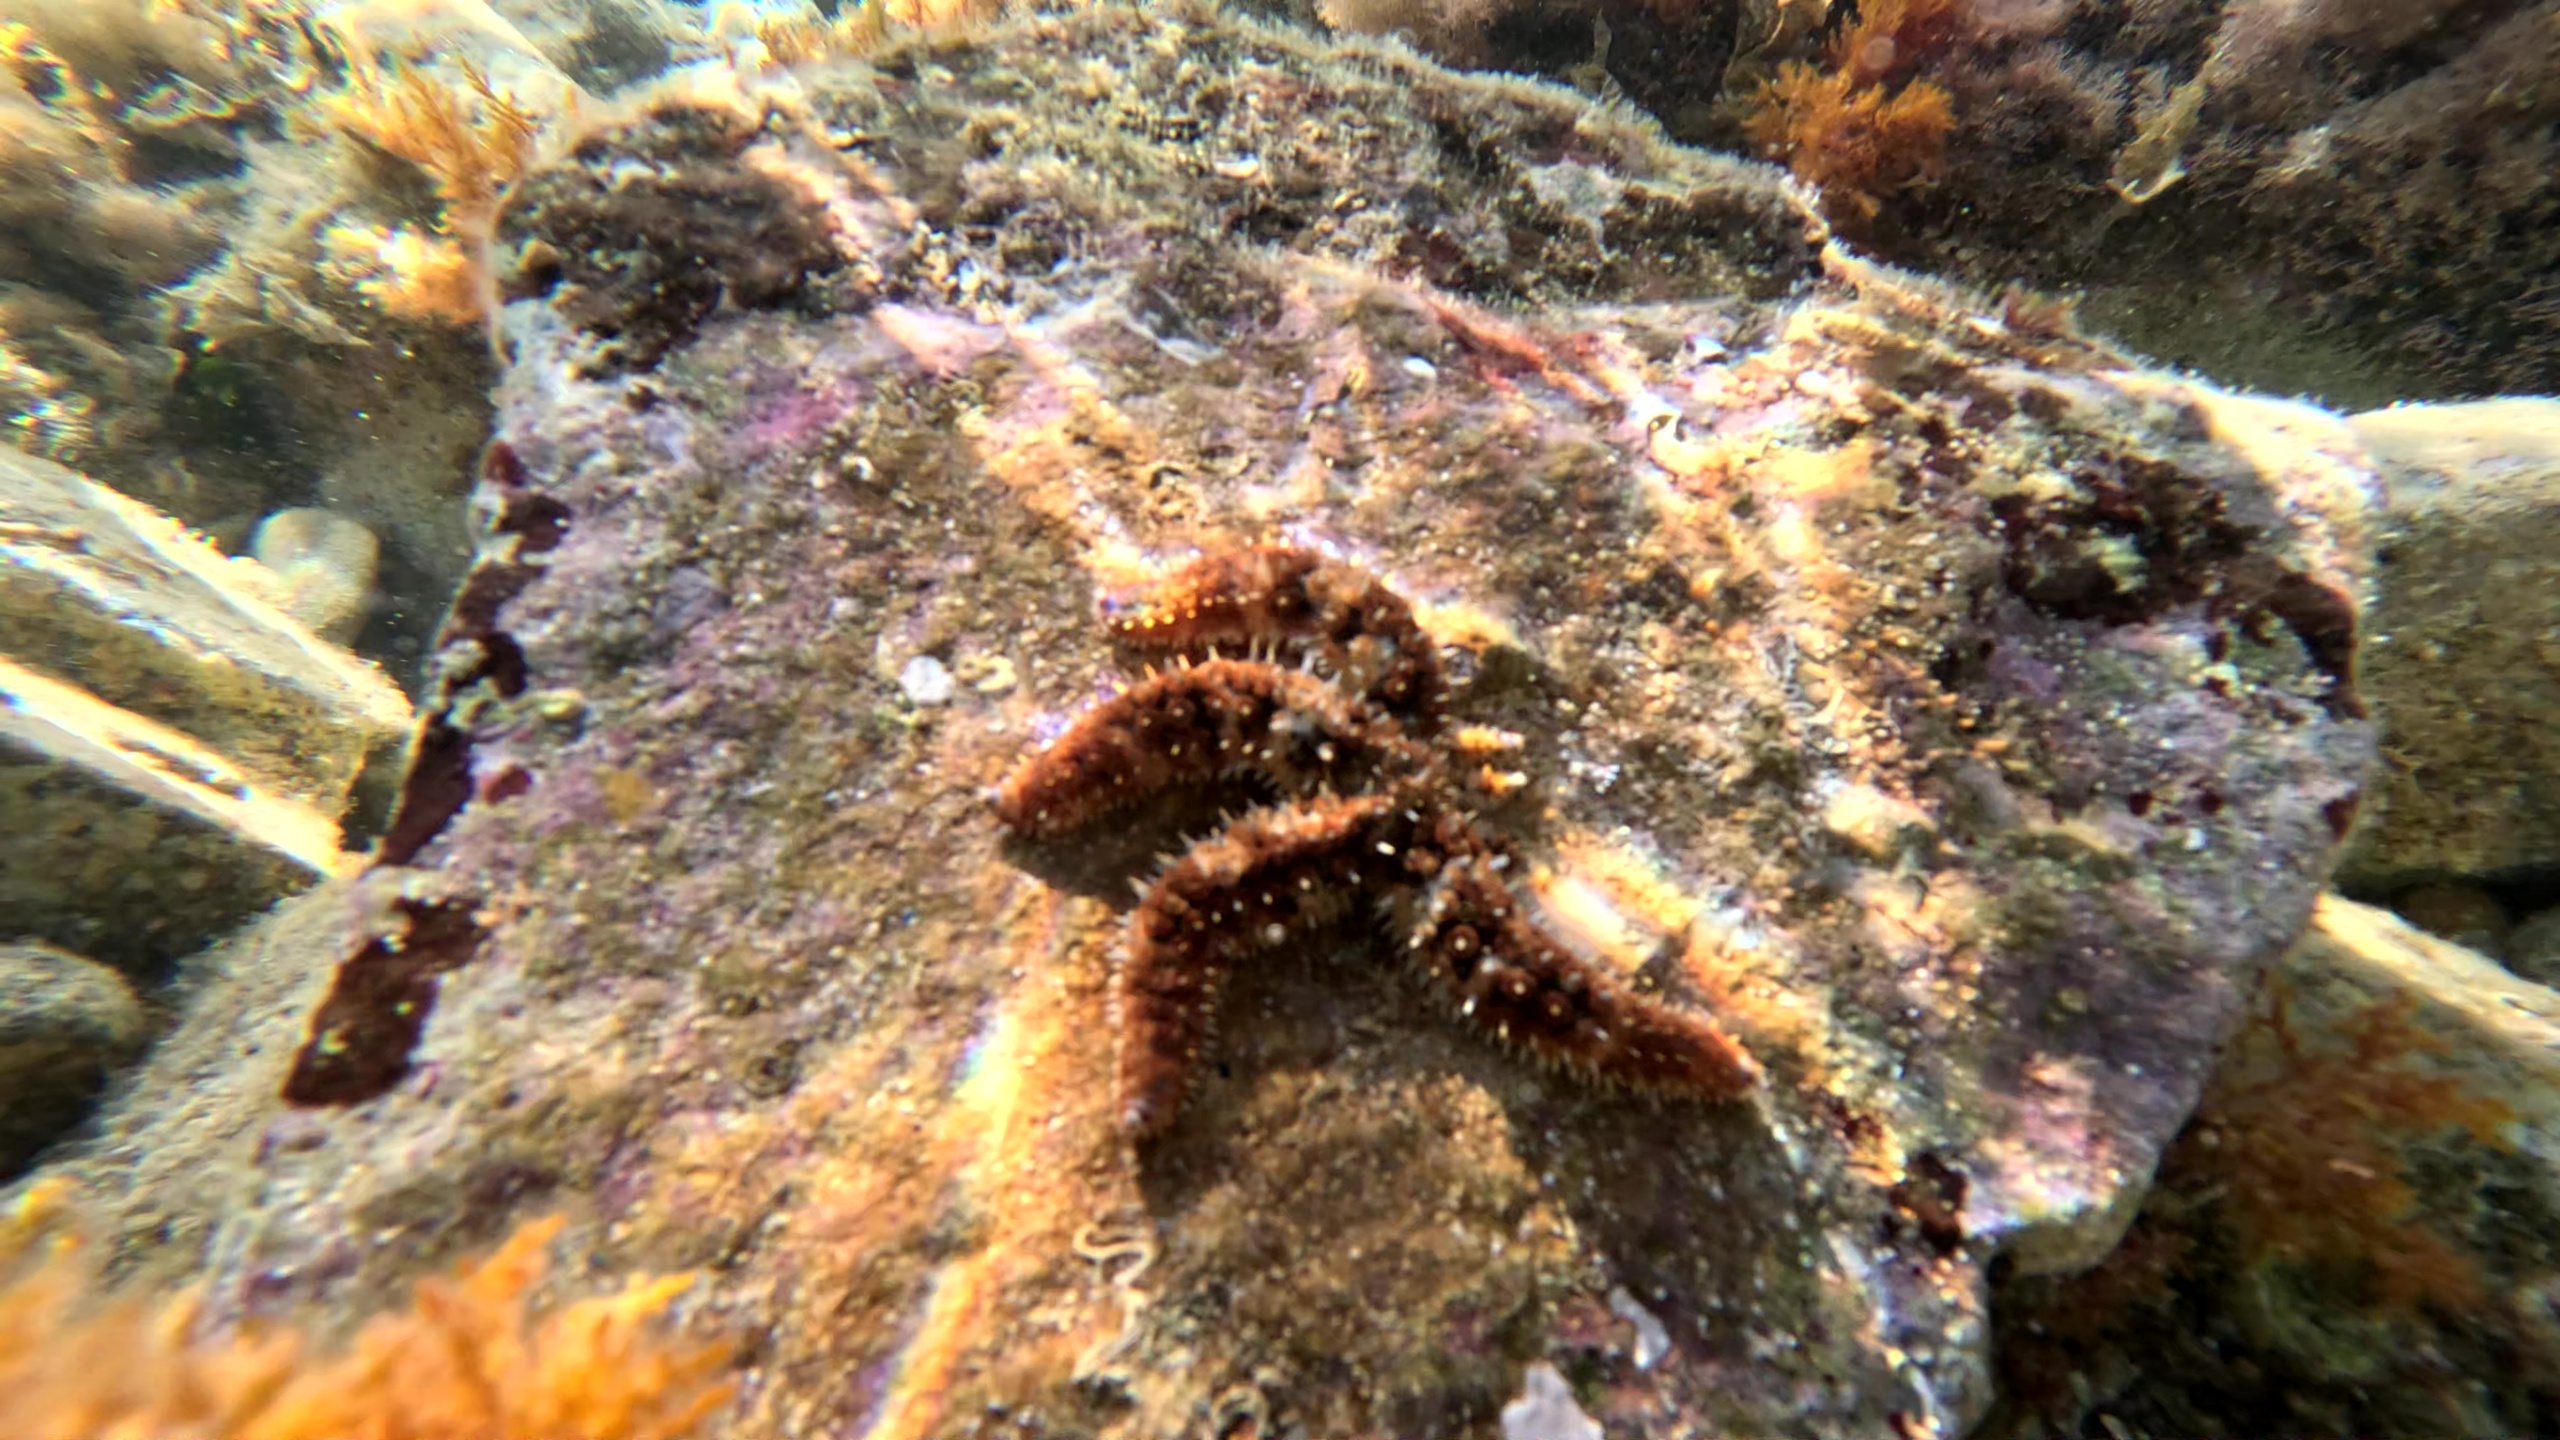 Variable spiny starfish - Coscinasterias tenuispina - Stella marina spinosa variabile - www.intotheblue.it